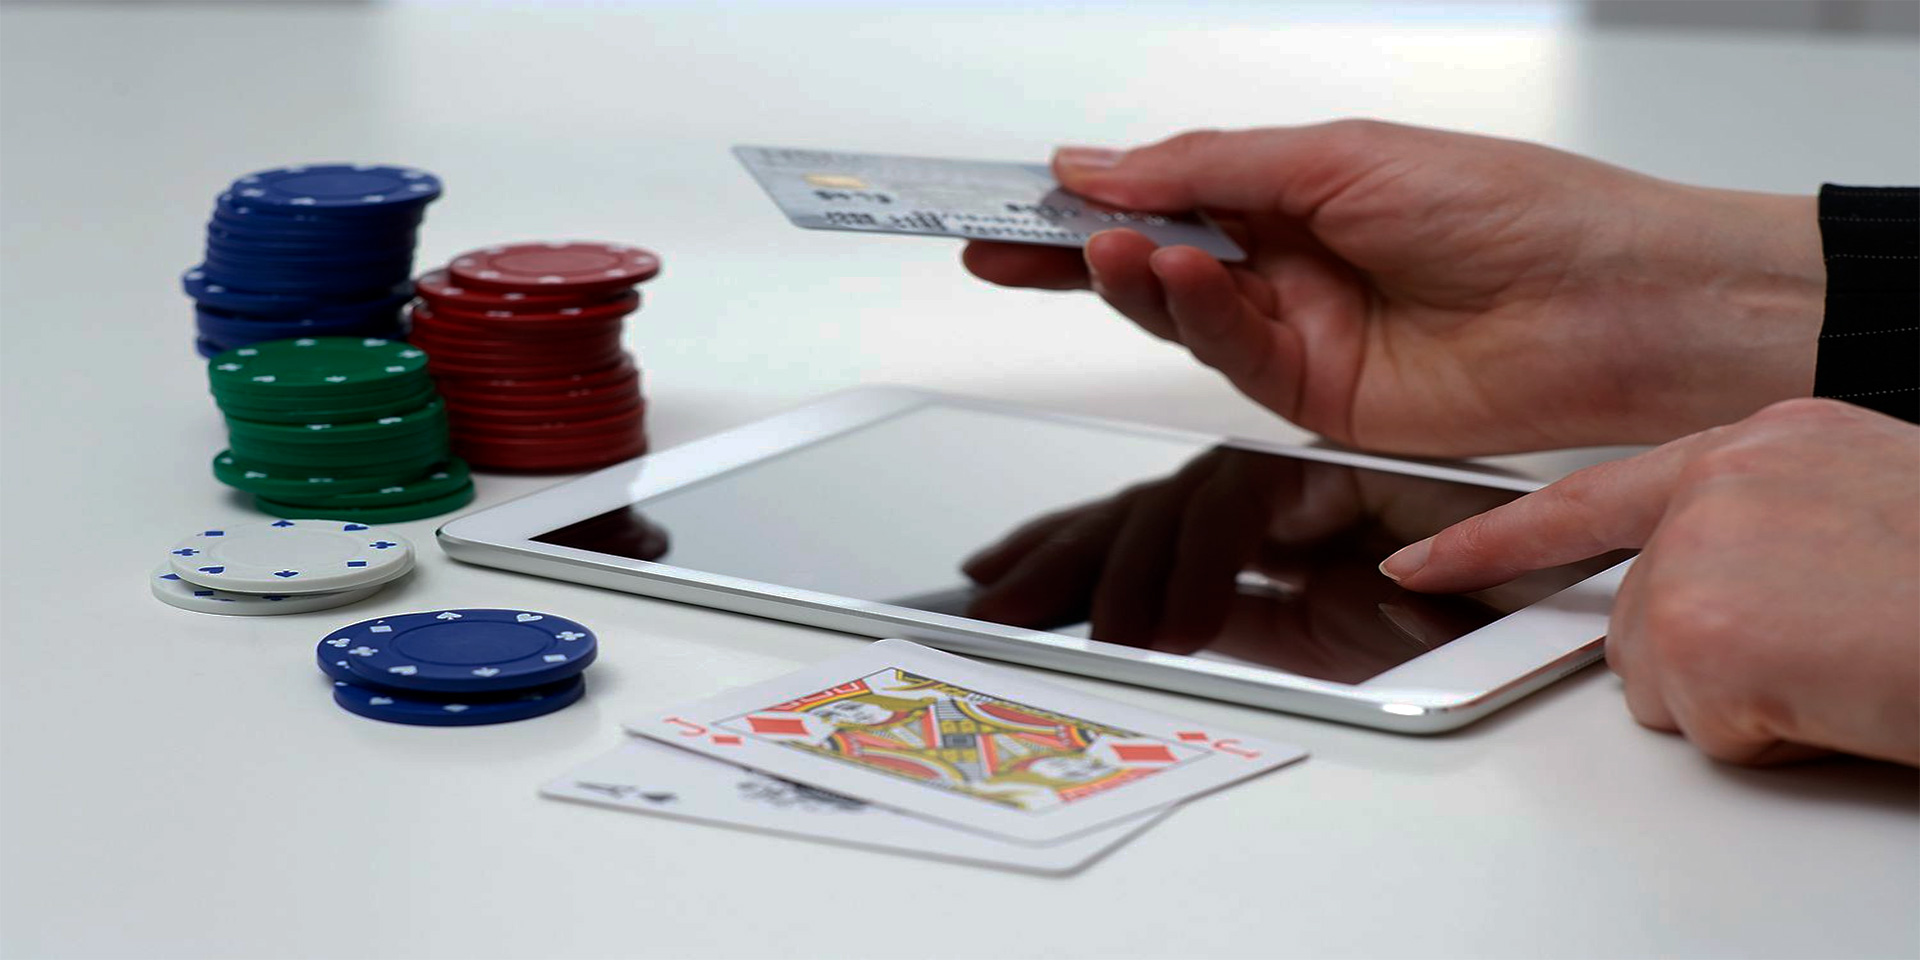 Using credit cards in casinos